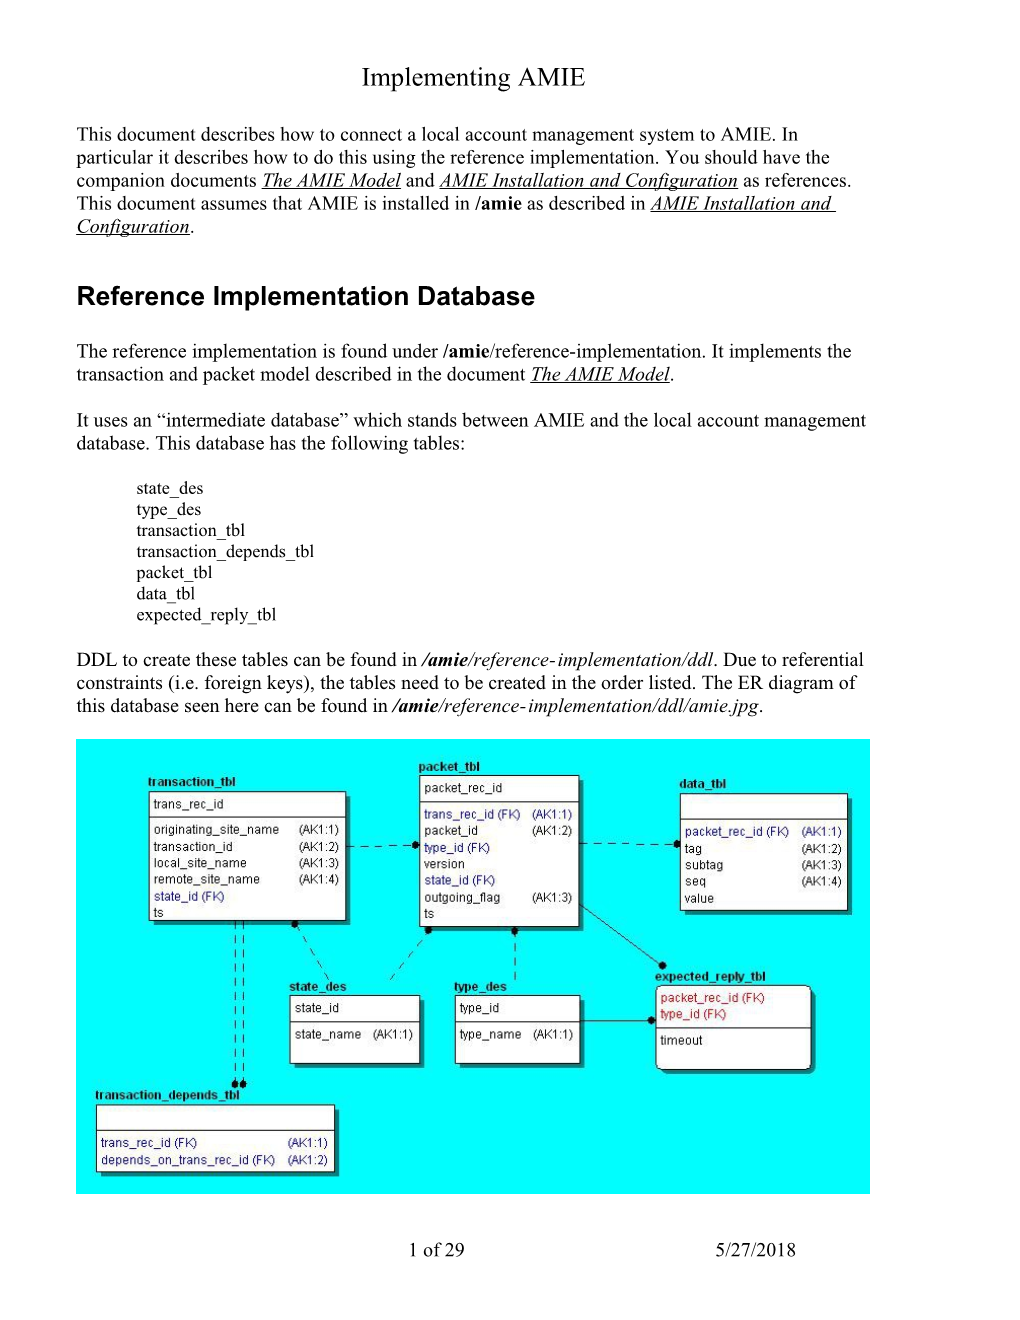 Reference Implementation Database